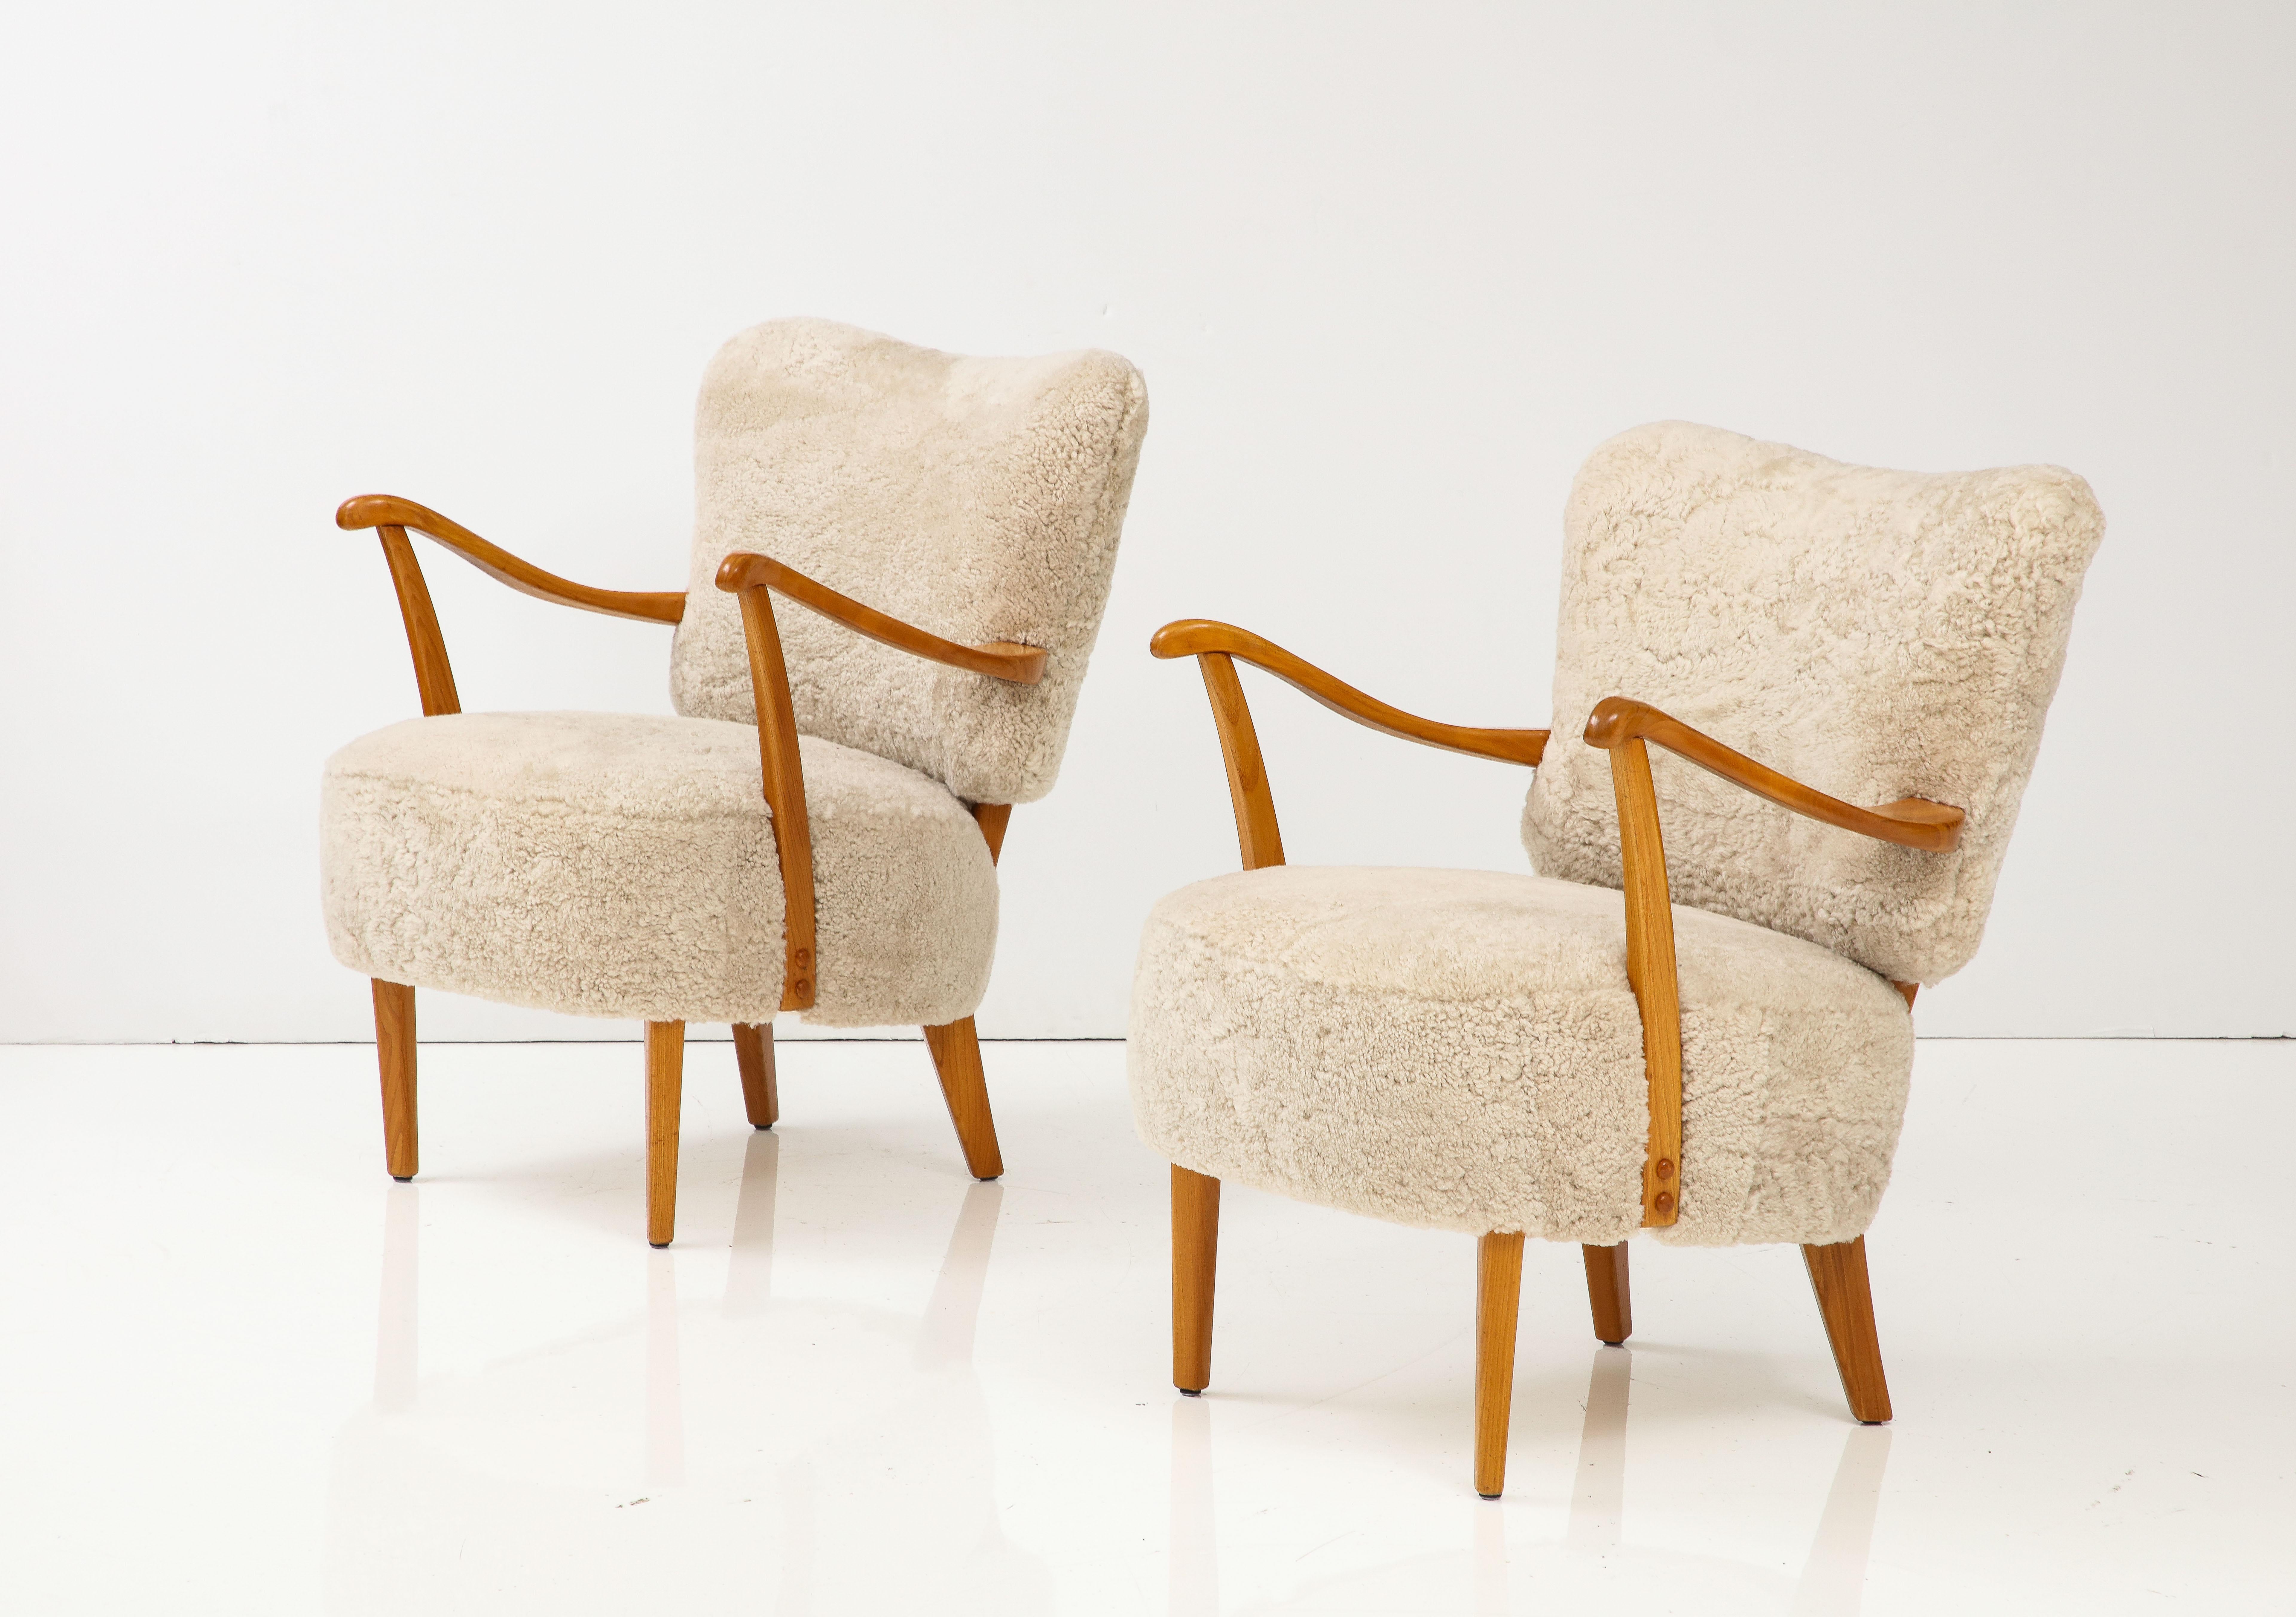 Elm A Pair of Swedish Modern Sheepskin Upholstered Armchairs, Circa 1940-50